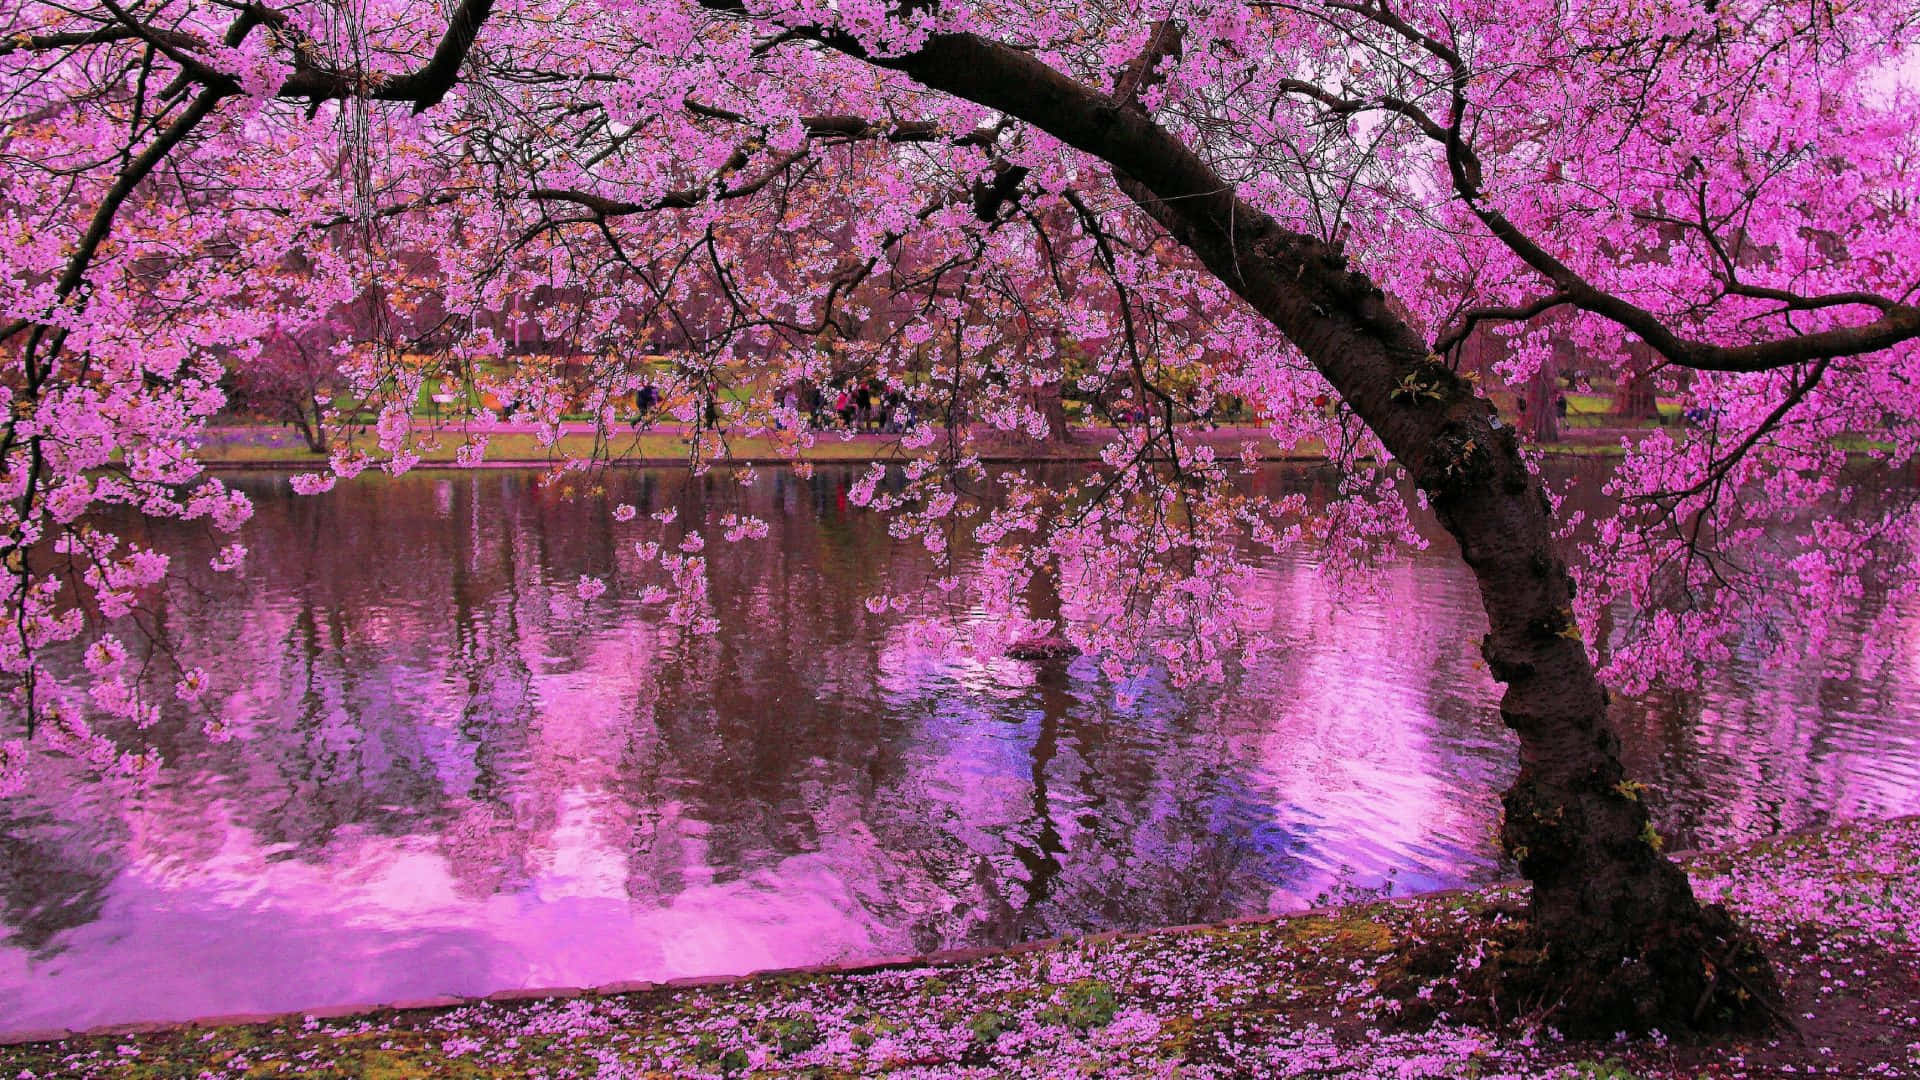 Stunning Cherry Blossom Tree in Full Bloom